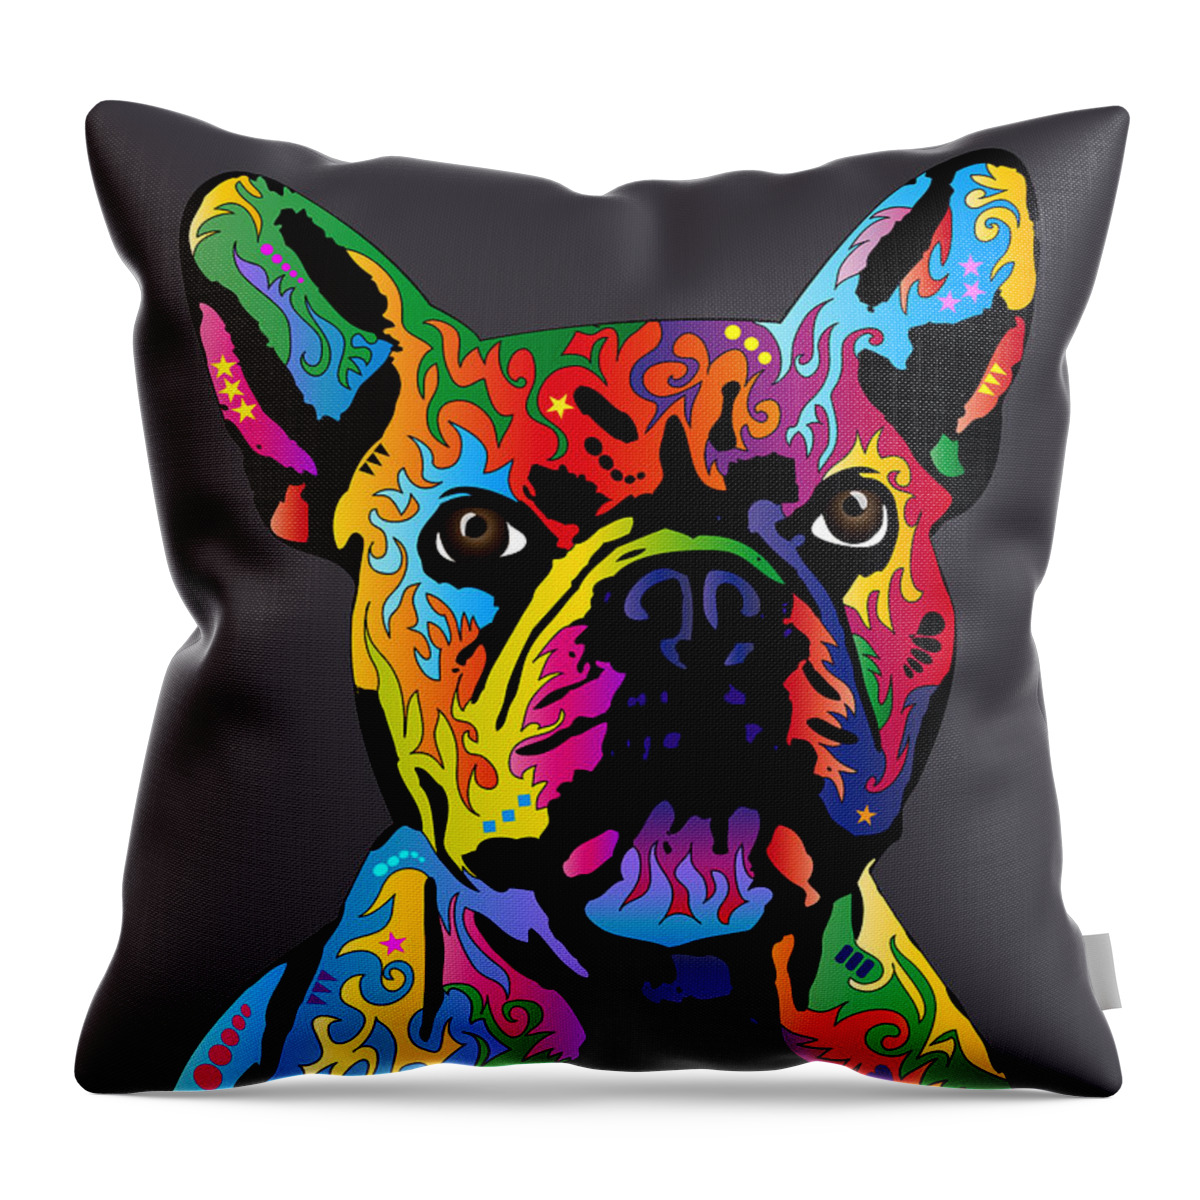 French Bulldog Throw Pillow featuring the digital art French Bulldog #1 by Michael Tompsett